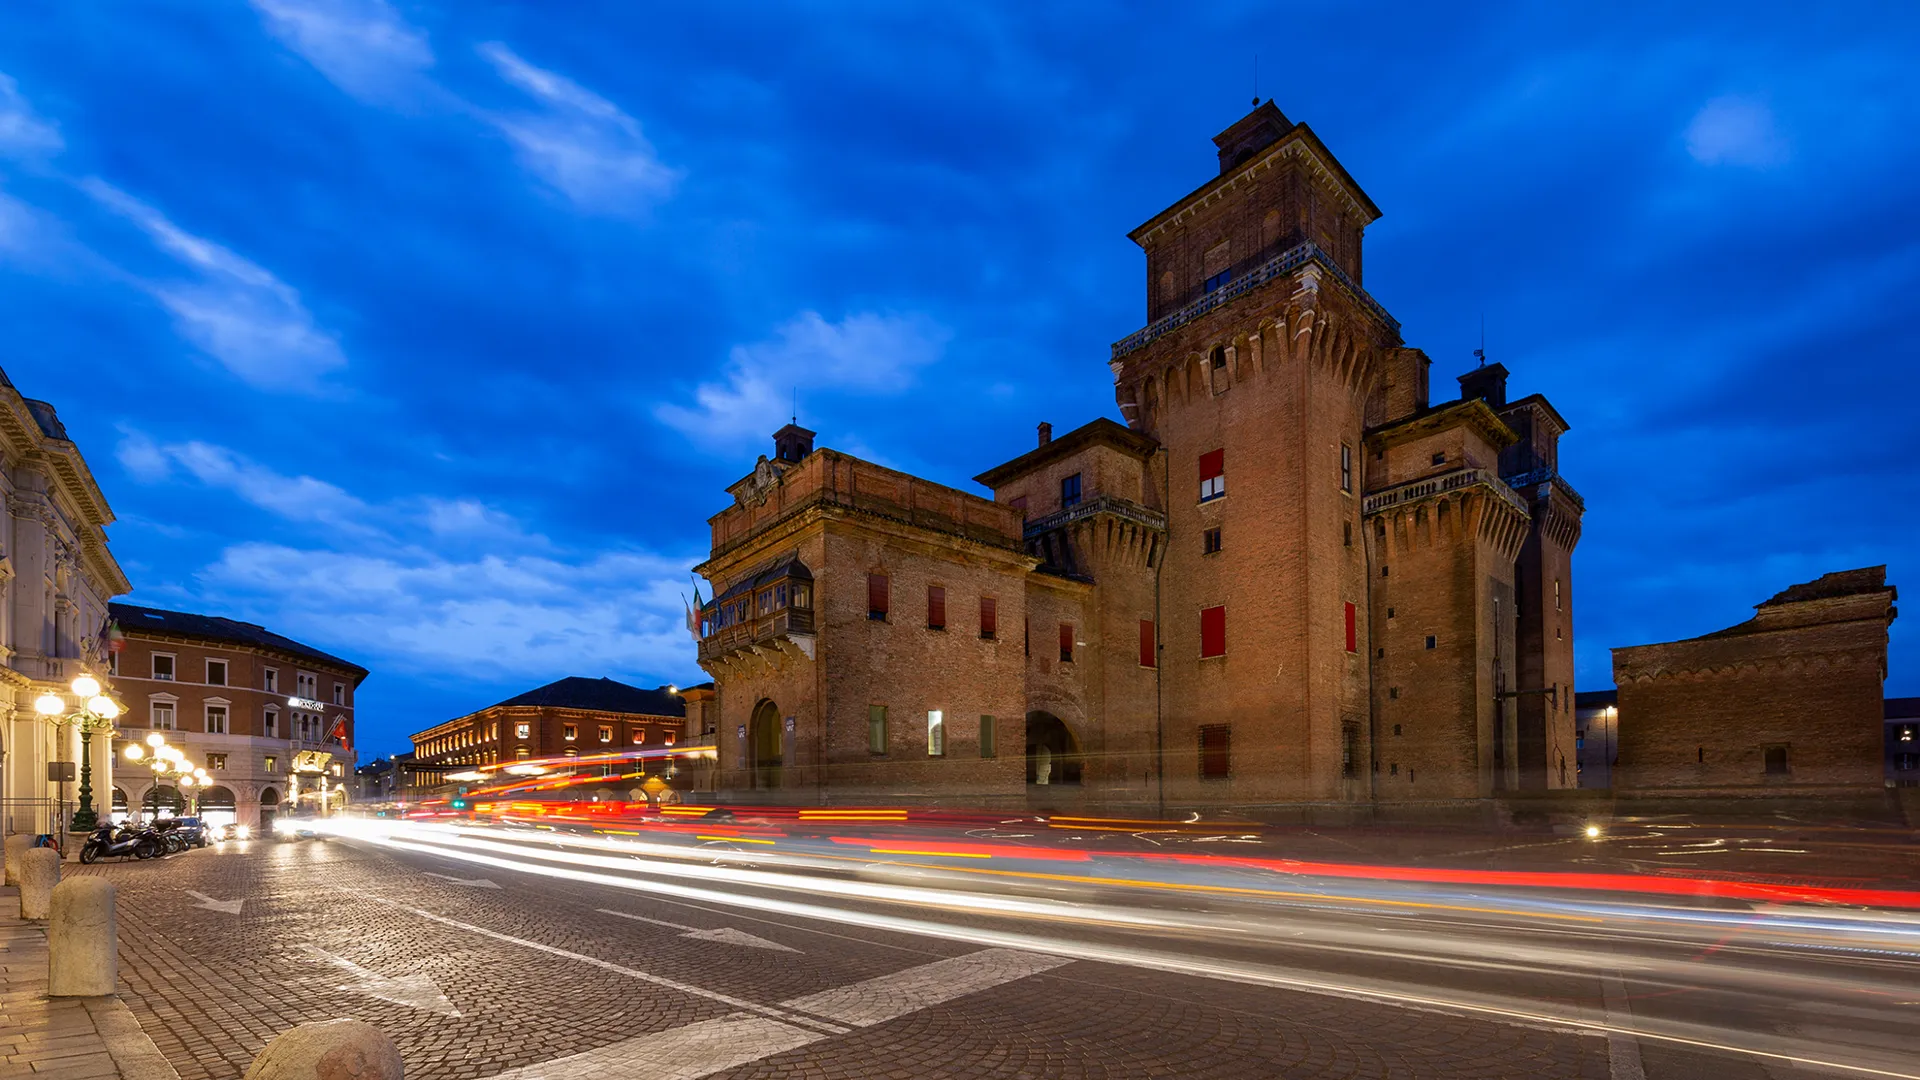 Ferrara castello Estense